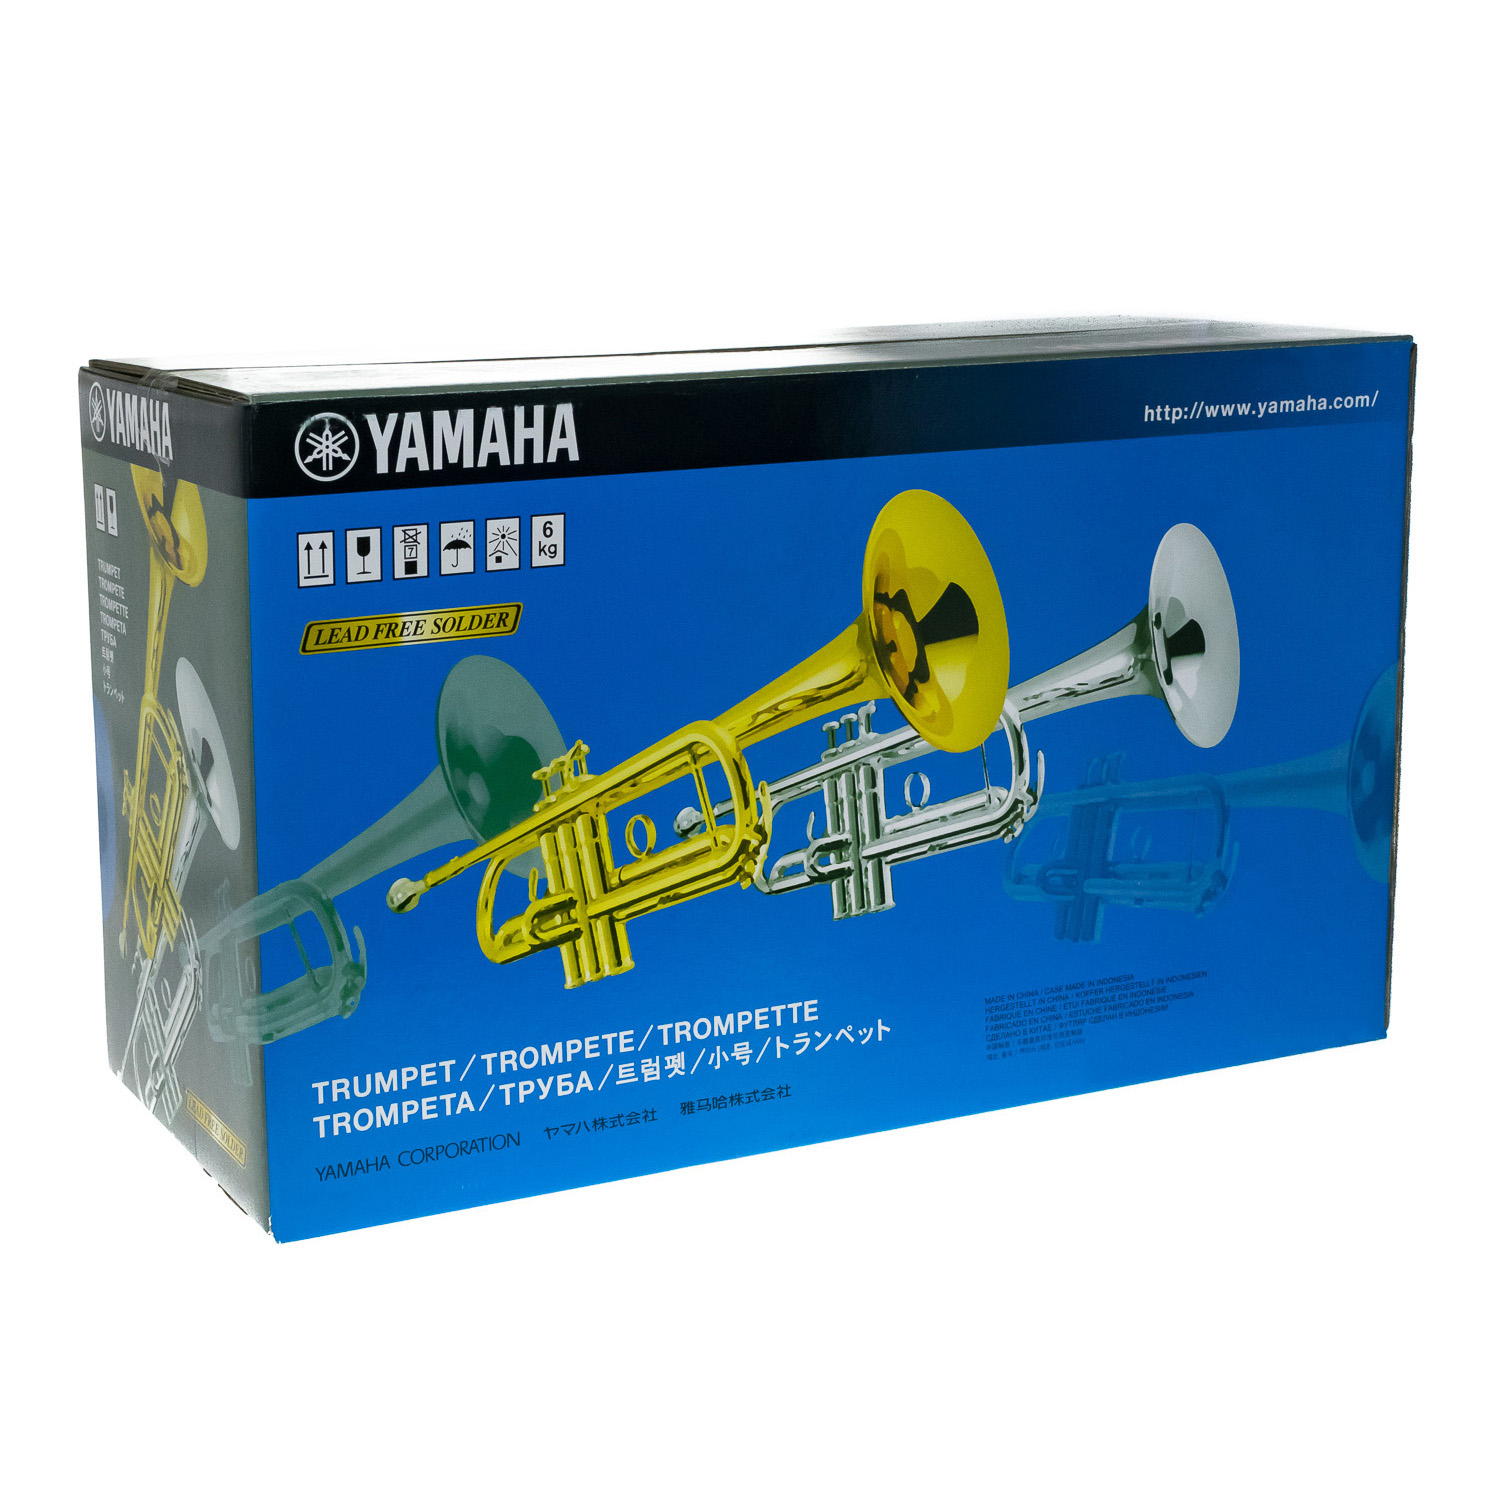 Yamaha Bb Trumpet - YTR 4335 GS II